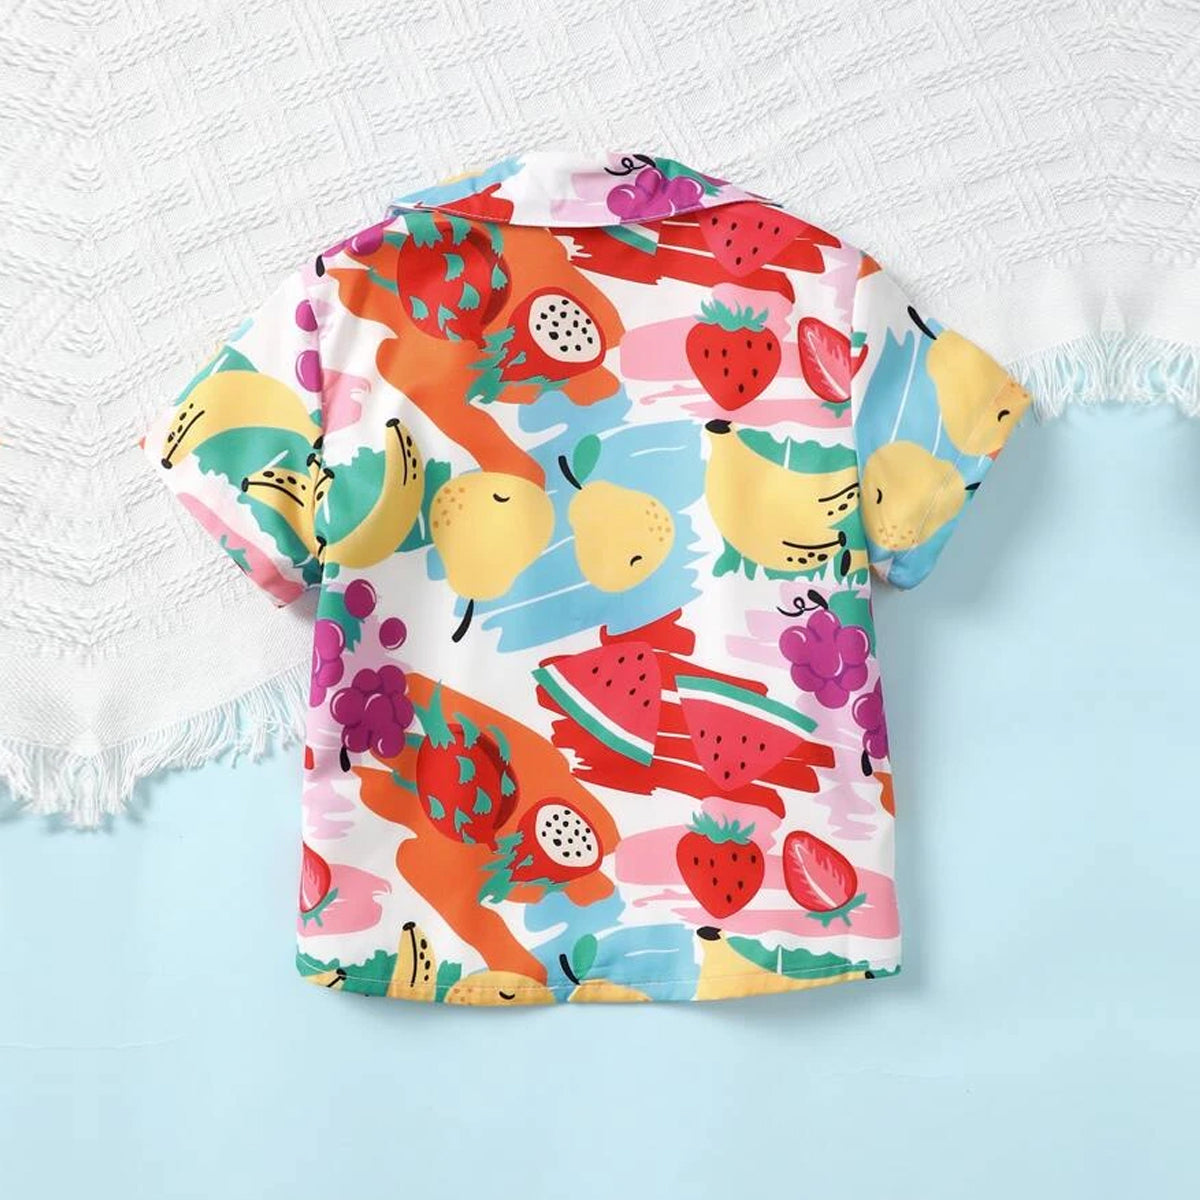 Venutaloza Boy's Graphic Fruit's Print Short Sleeve Shirt For Boy.